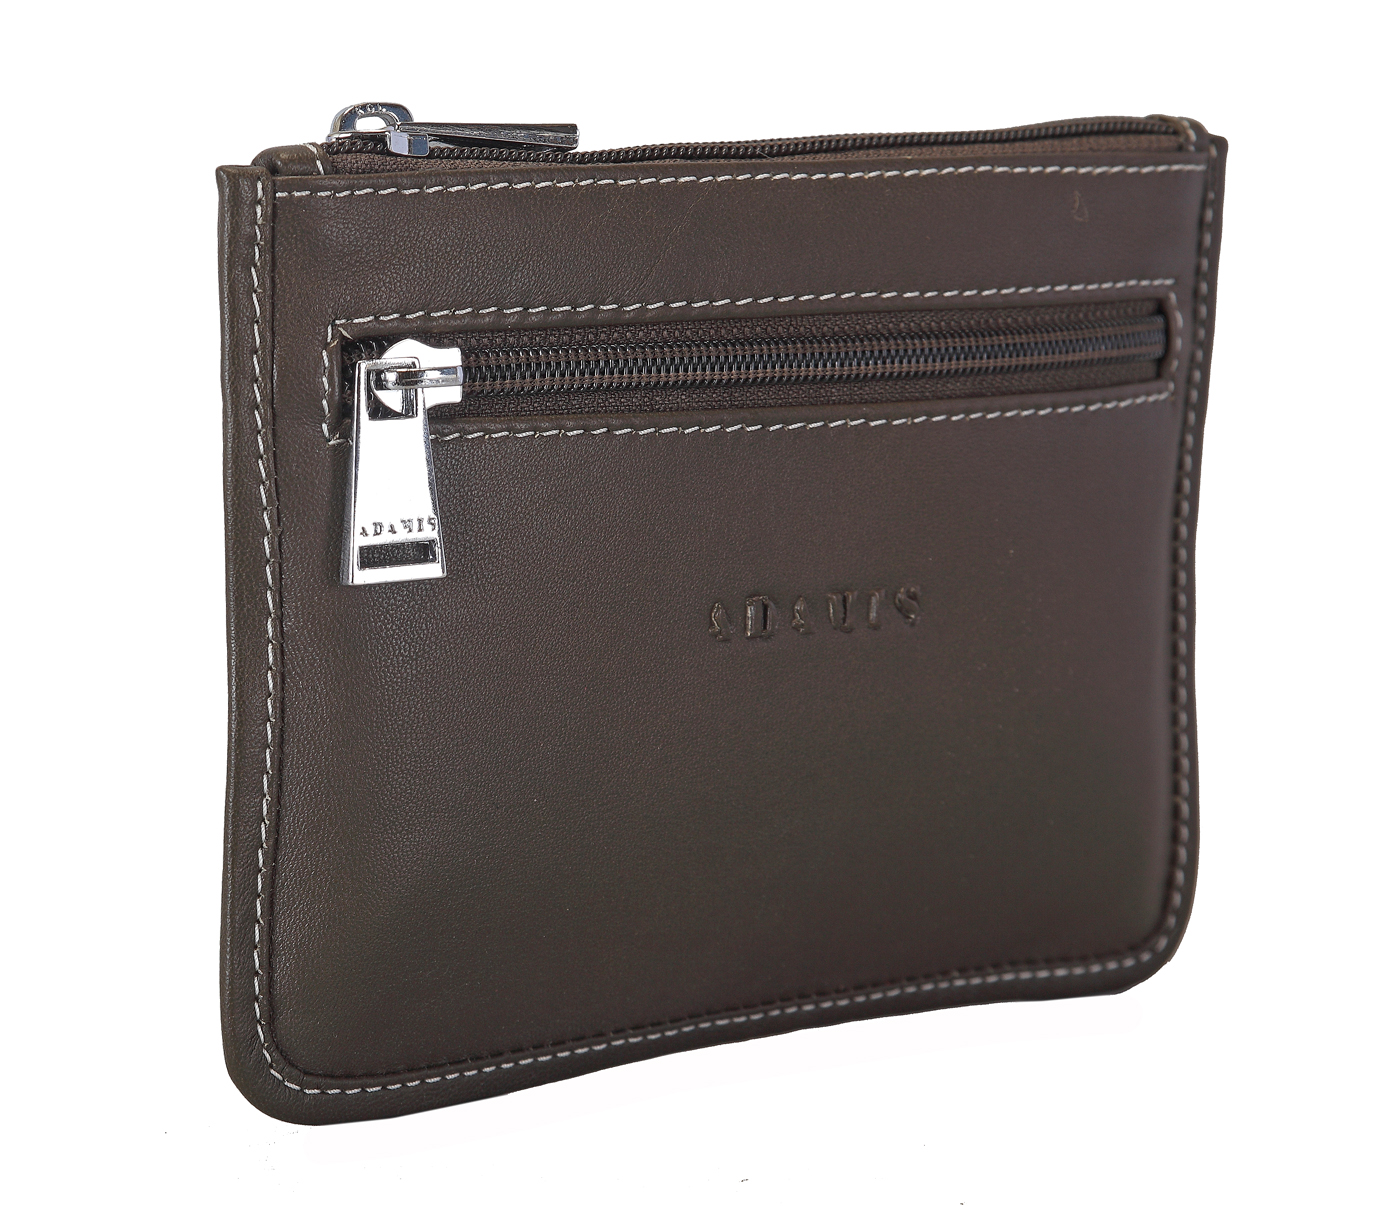 W228--Unisex multi purpose pouch in Genuine Leather - Brown.